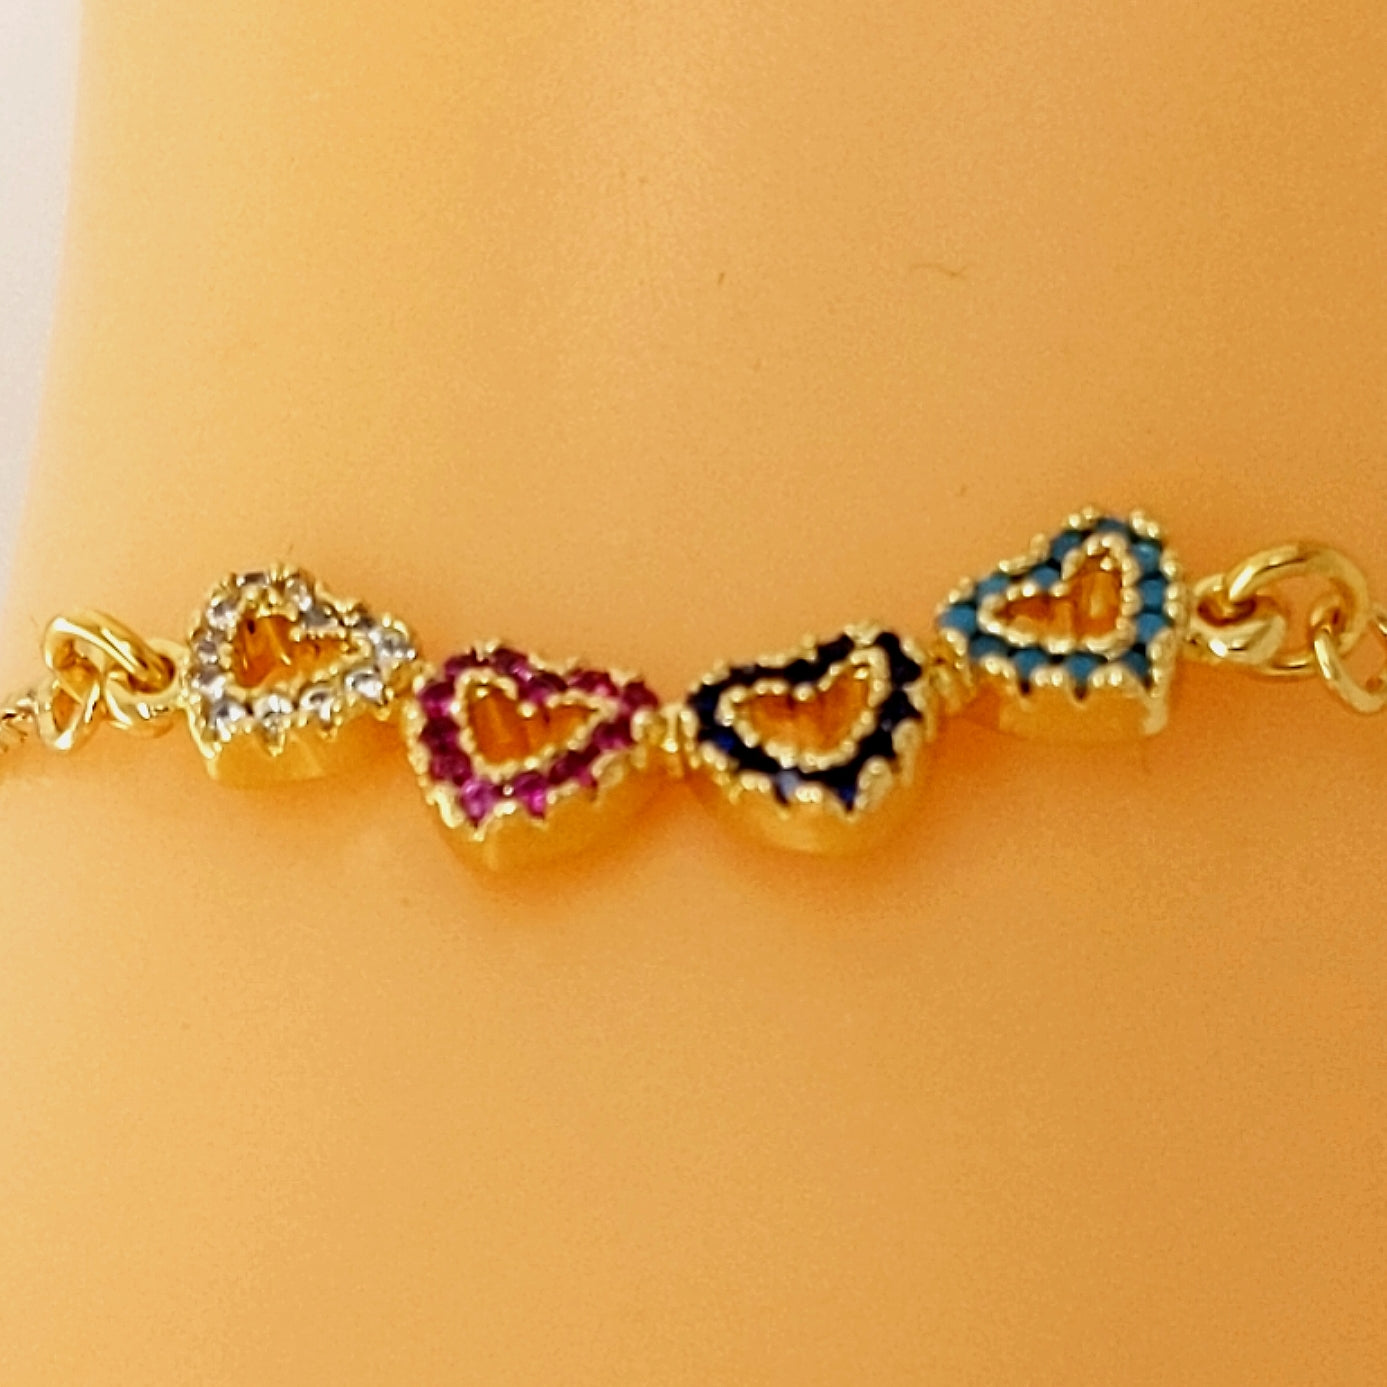 Linked Colorful Four Hearts Bolo Bracelet - HK Jewels